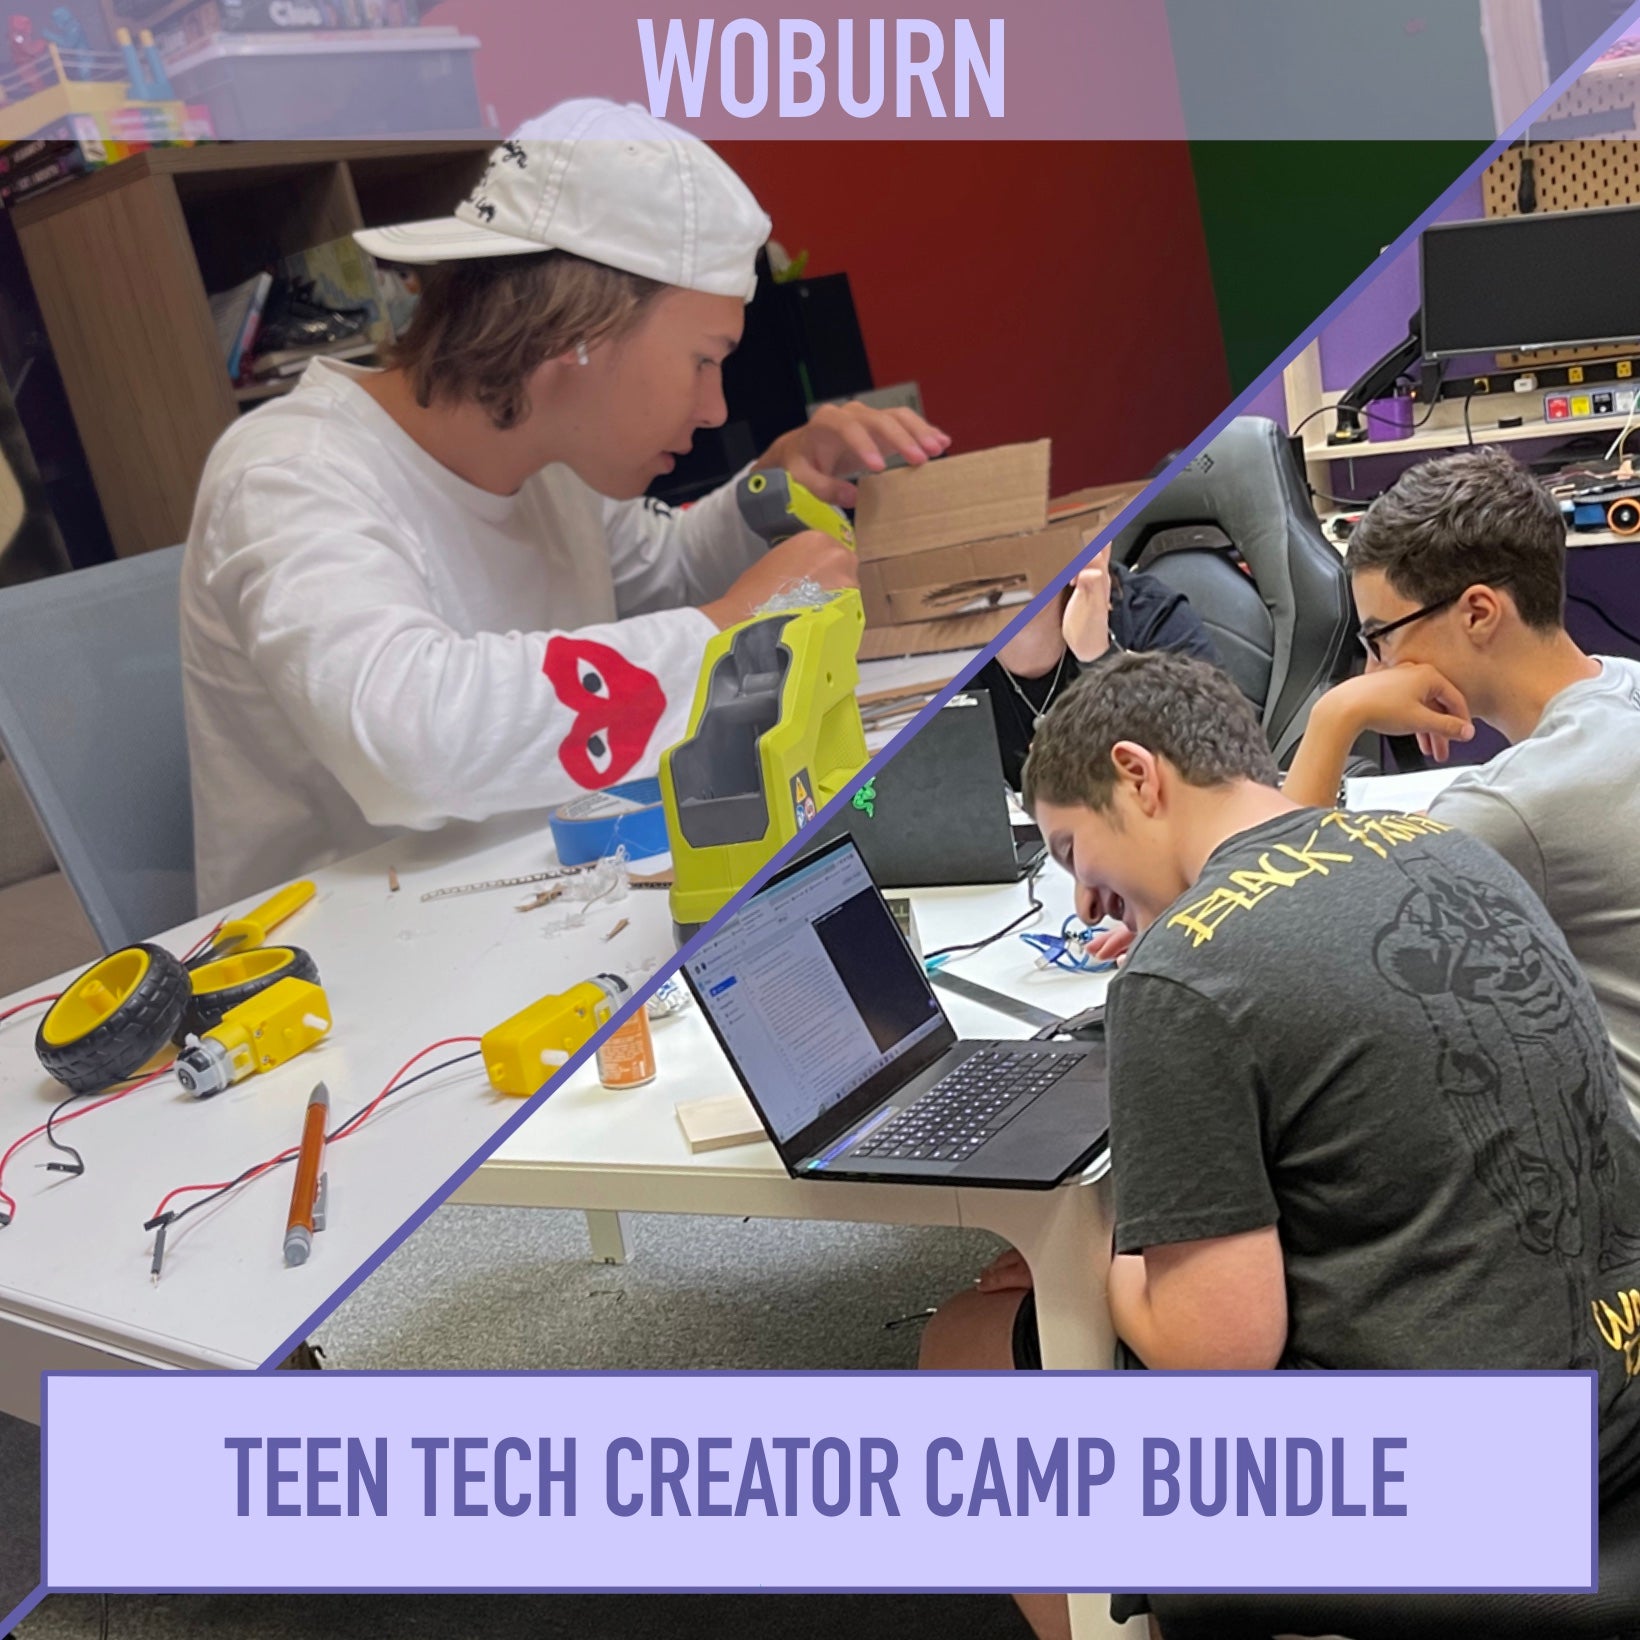 Teen Tech Creator Camp Bundle (Woburn)